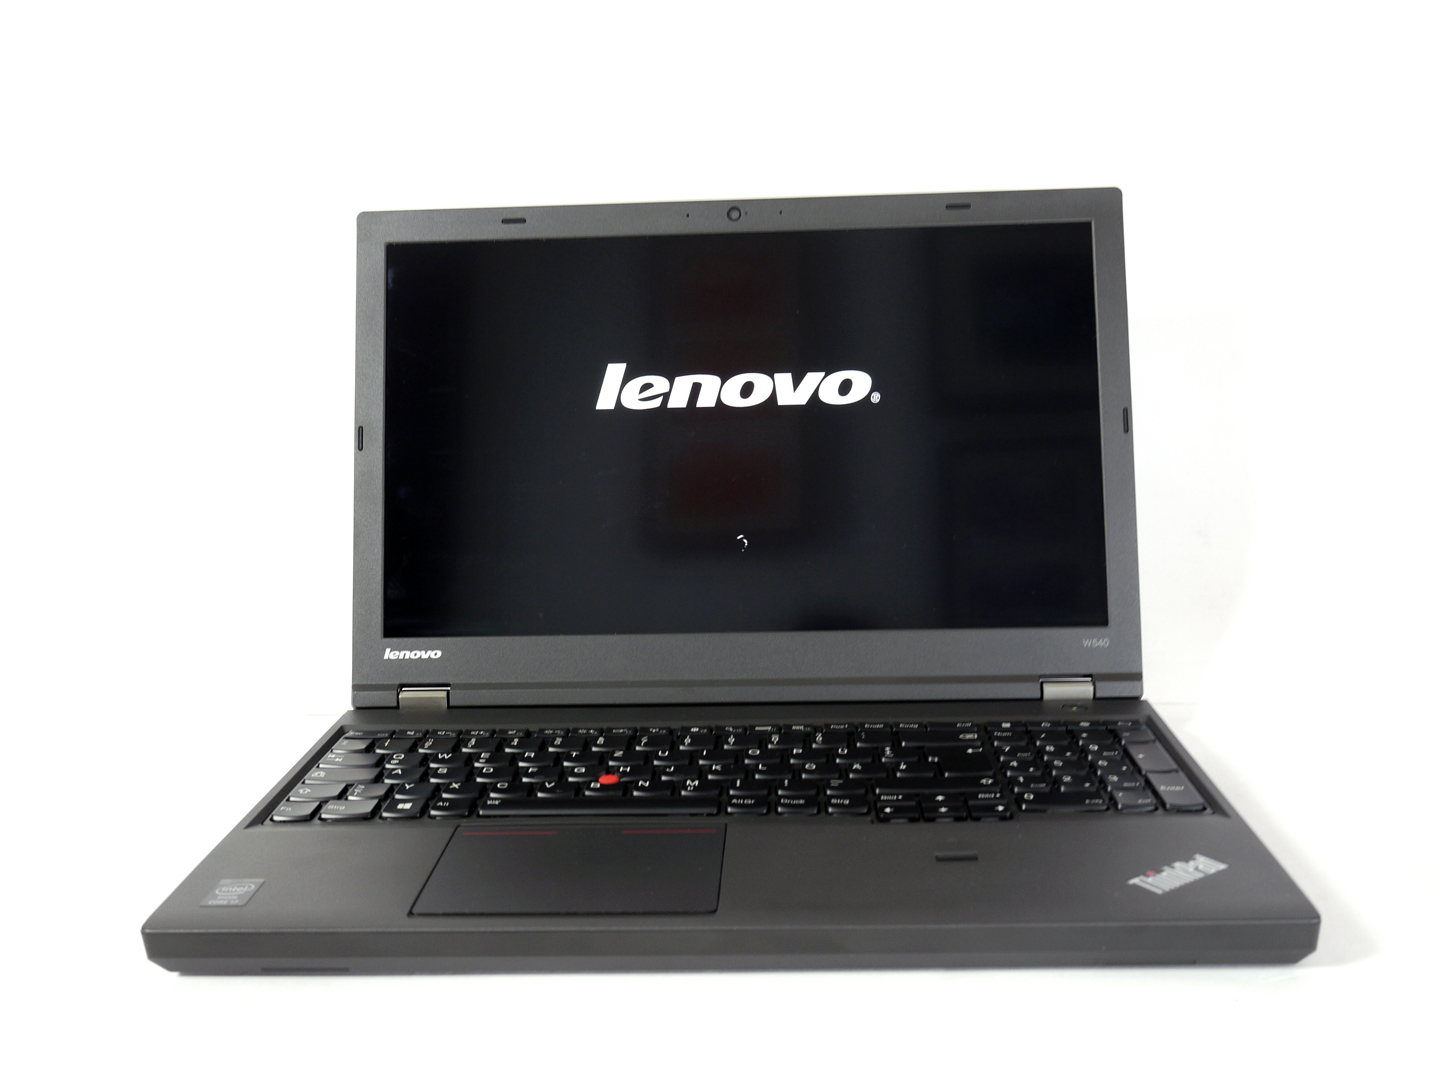 Lenovo thinkpad w 540 camp counselor jason